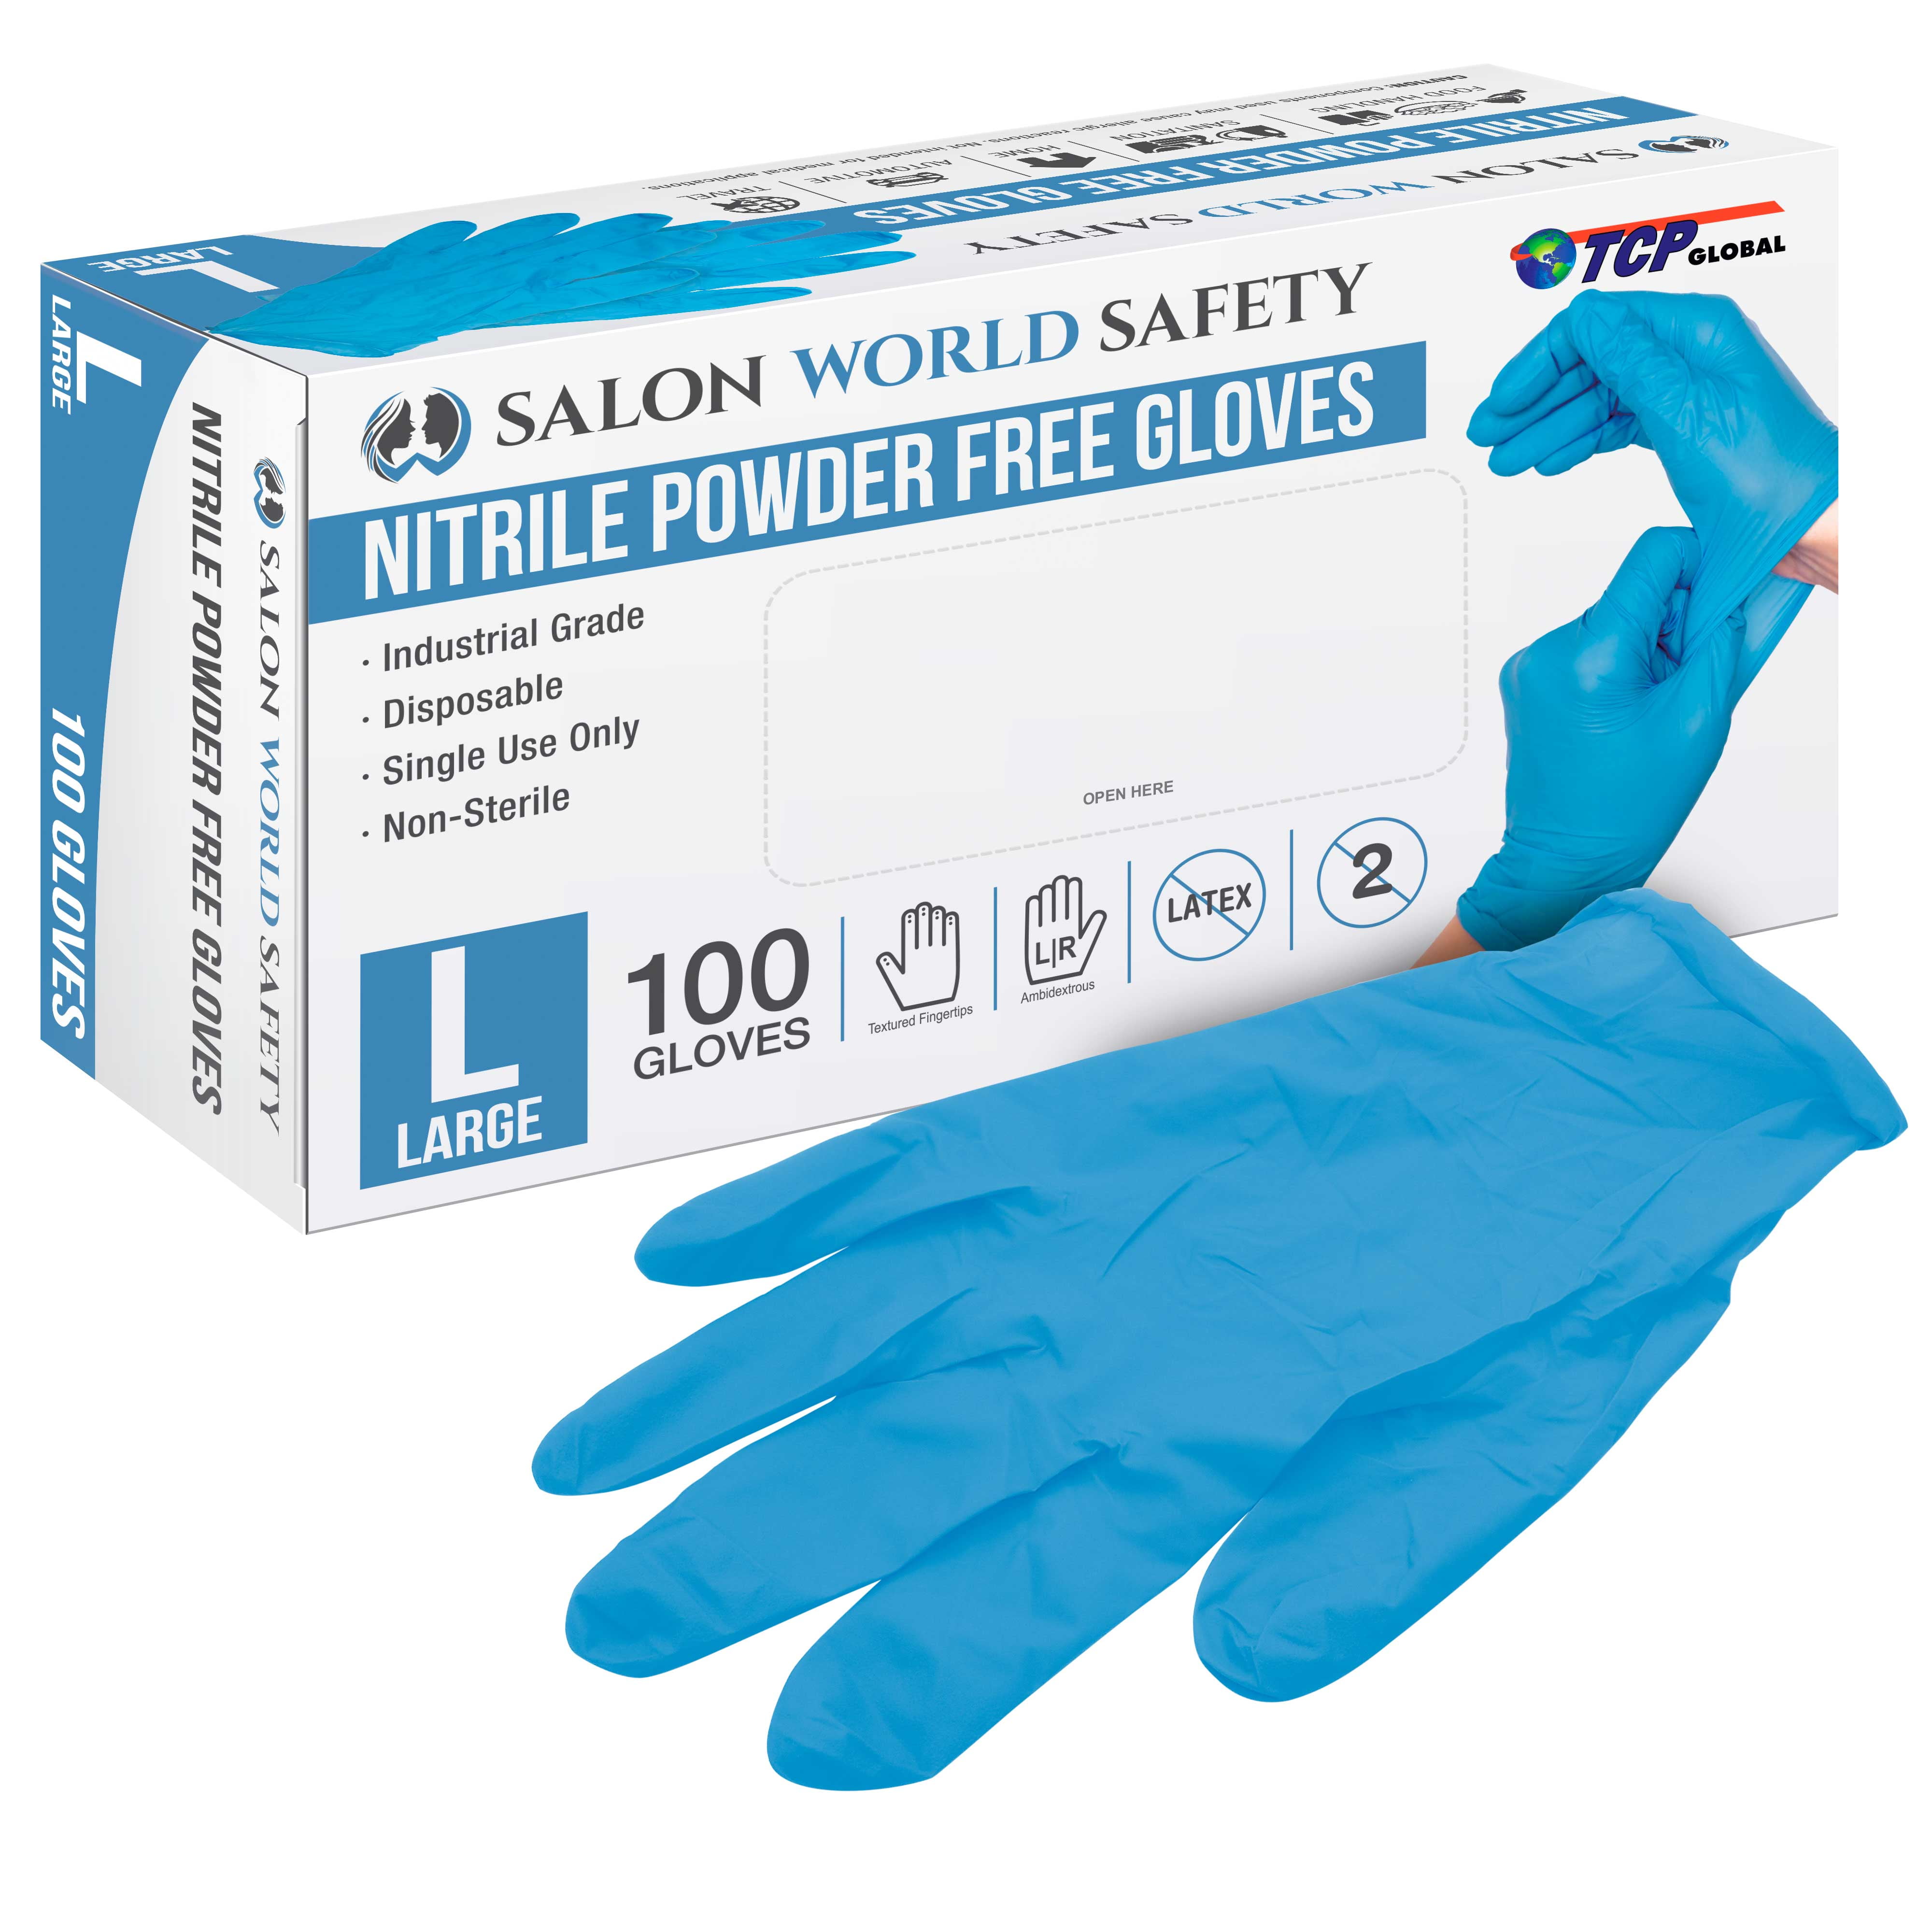 Nitrile Powder Free Gloves Large 100/Box.Extra Protection. 